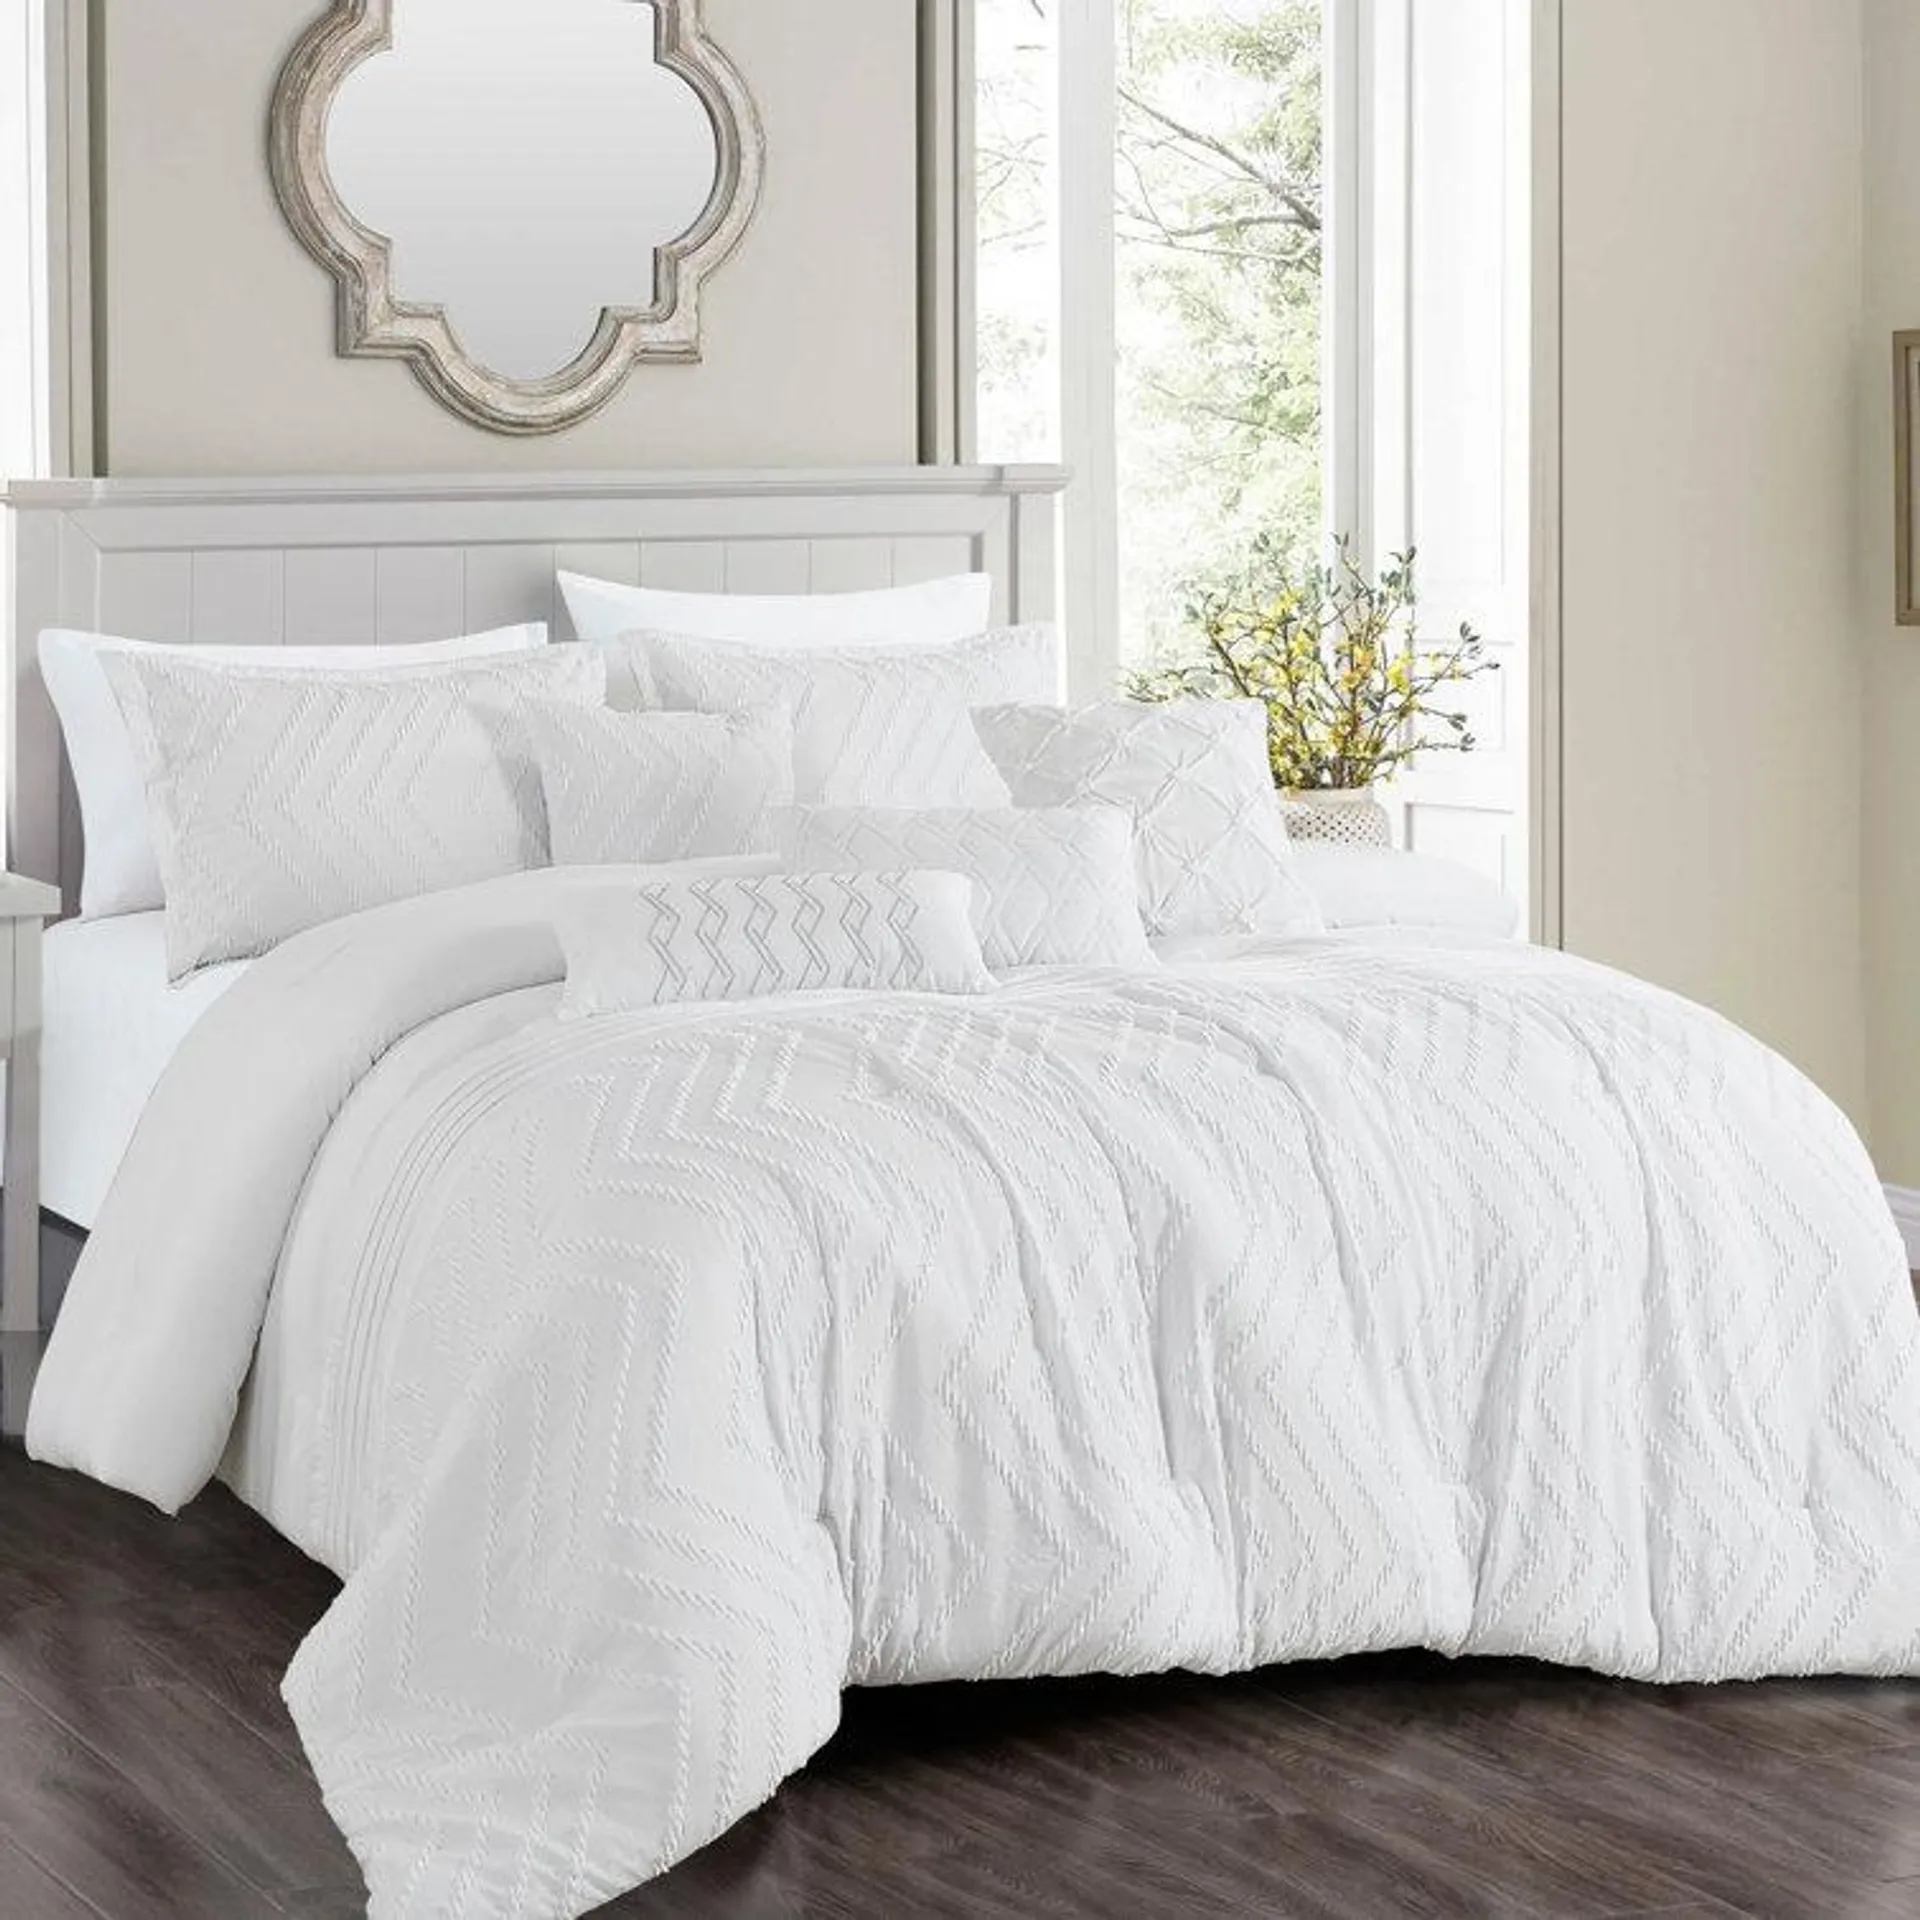 Talyah White 100% Cotton 7 Piece Comforter Set